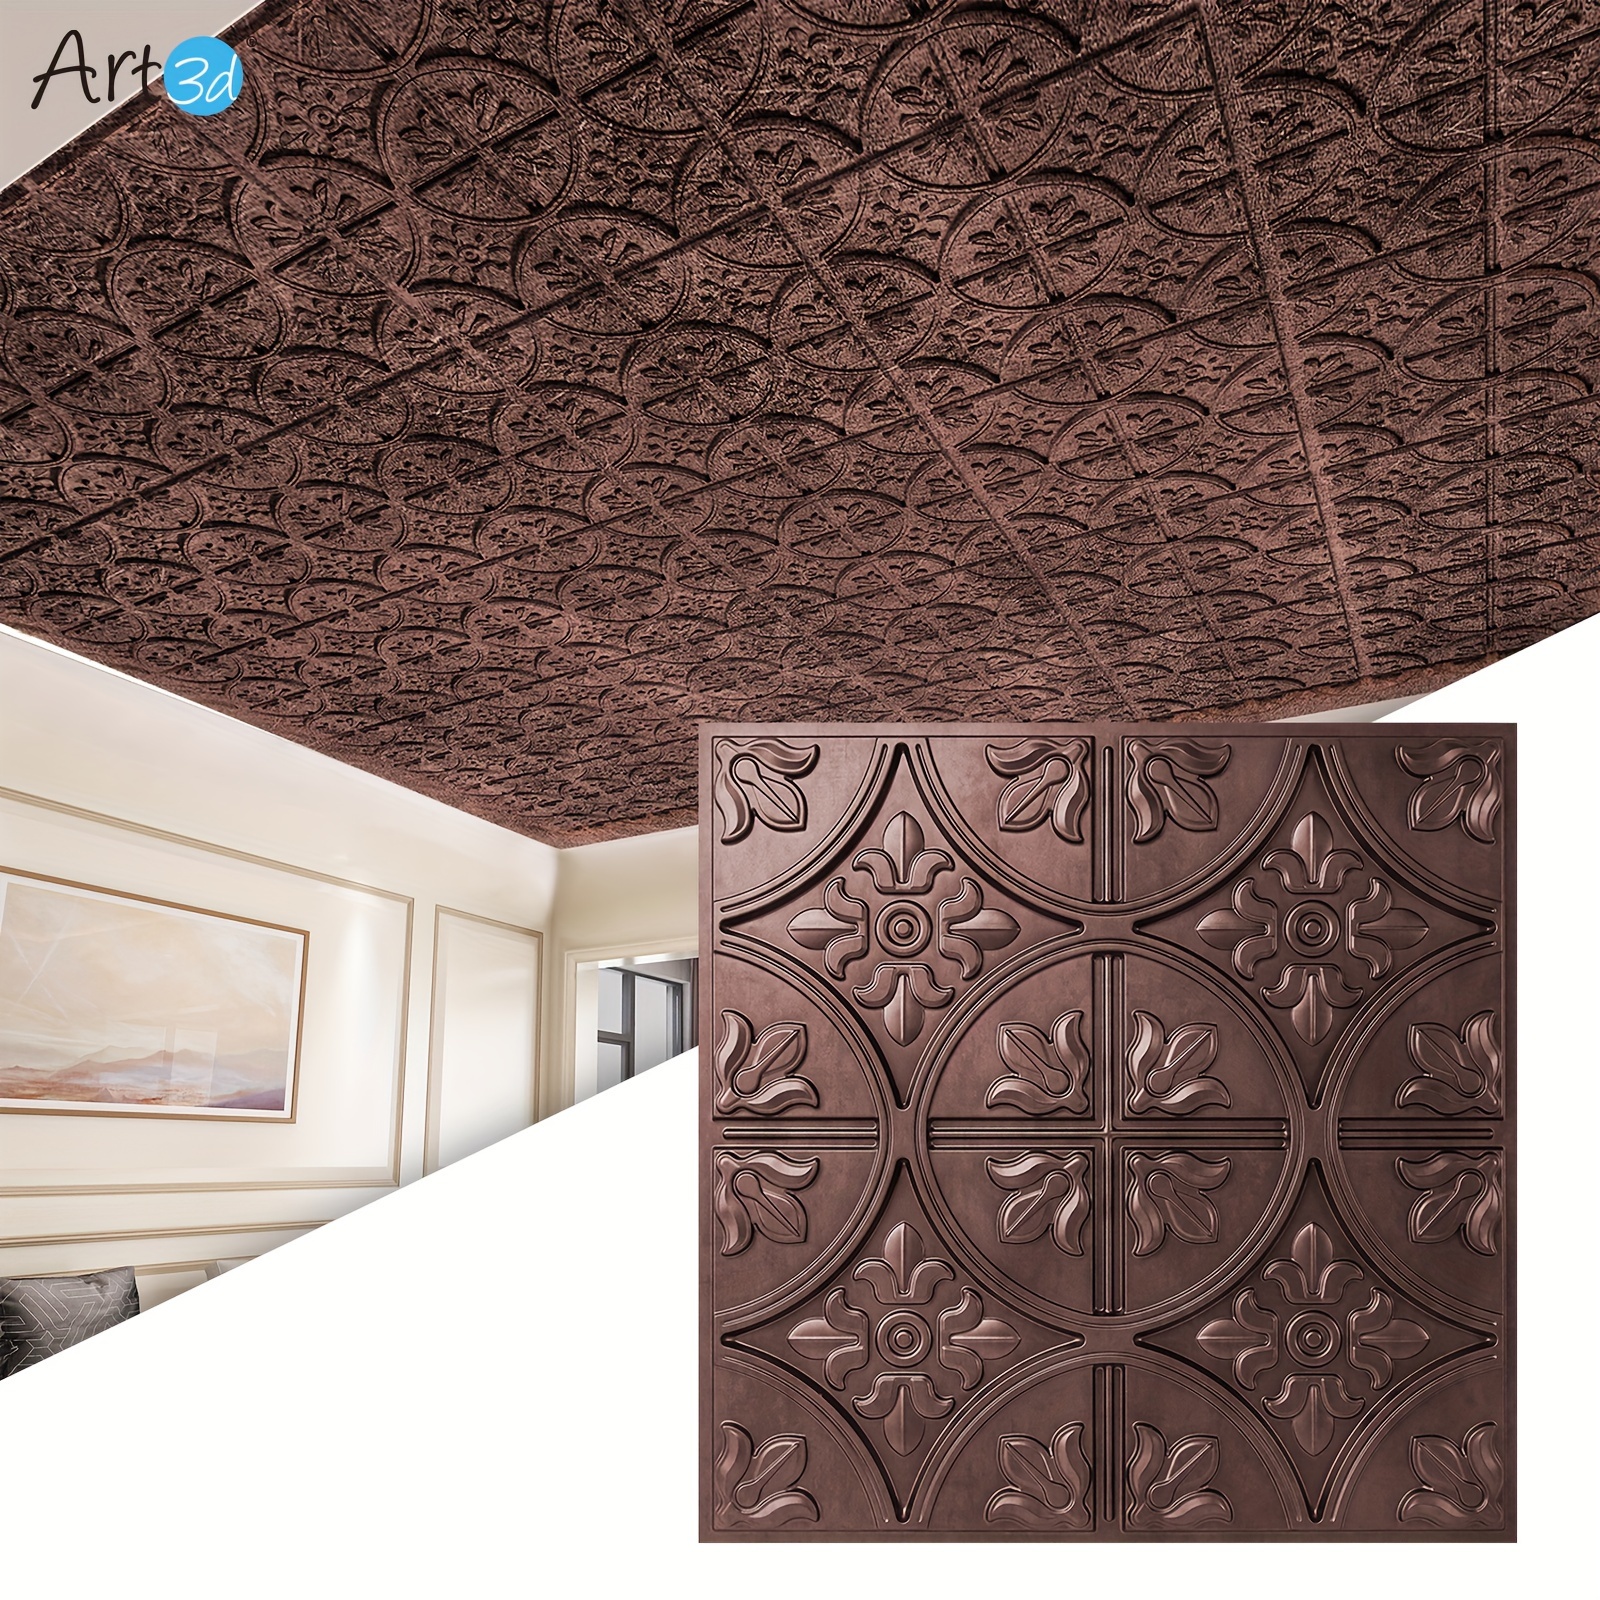 

Art3d 12-pack Drop Ceiling Tiles 24"x24" Ceiling Panel, Fancy Classic Style In Antique Copper, 48 Sq Ft/case